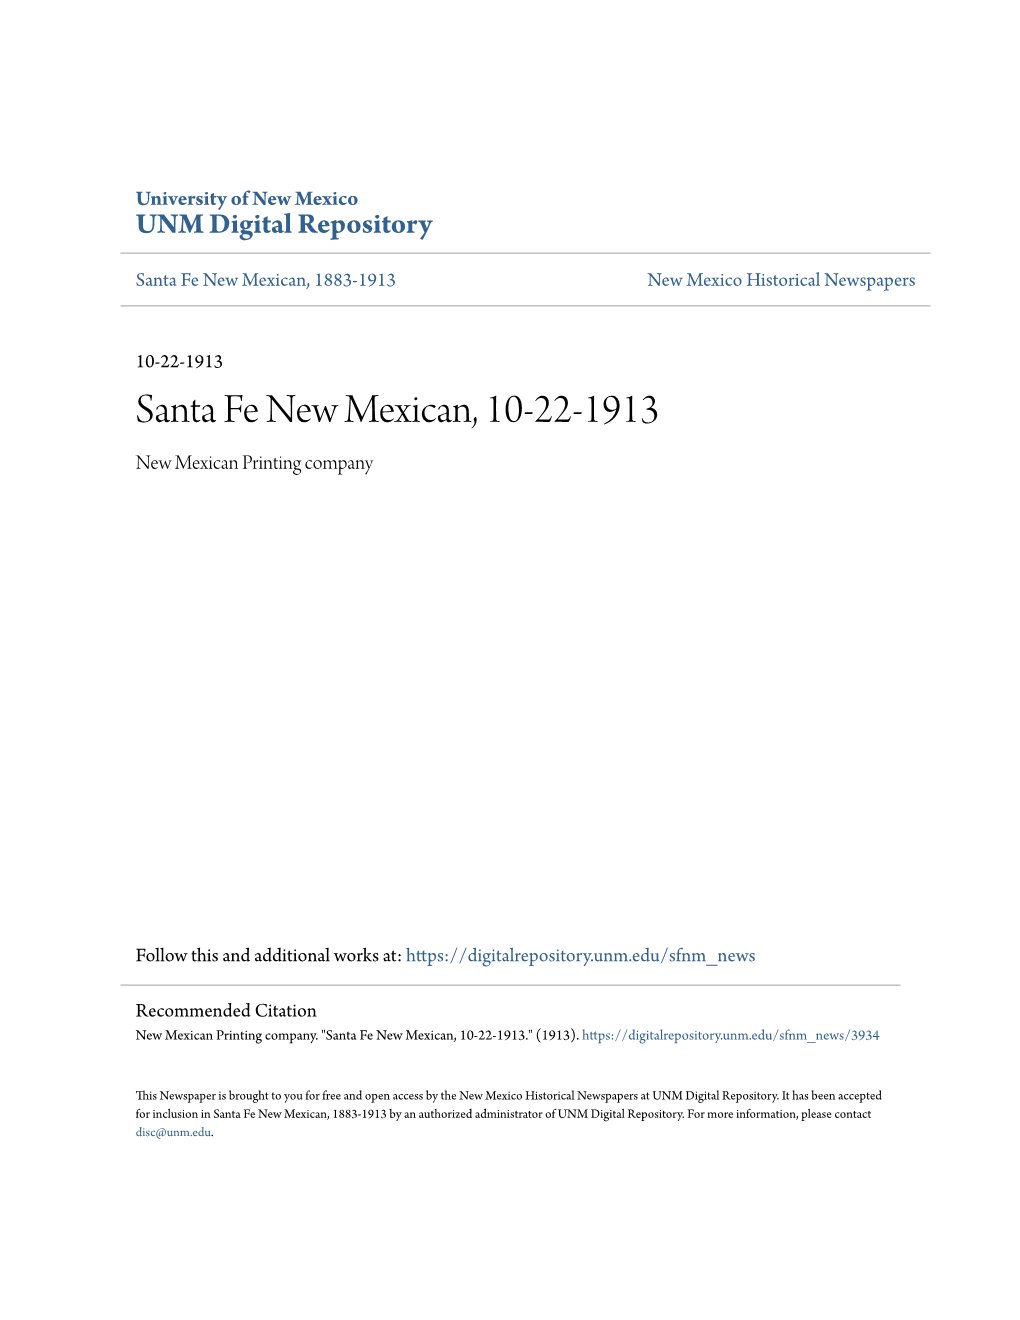 Santa Fe New Mexican, 10-22-1913 New Mexican Printing Company